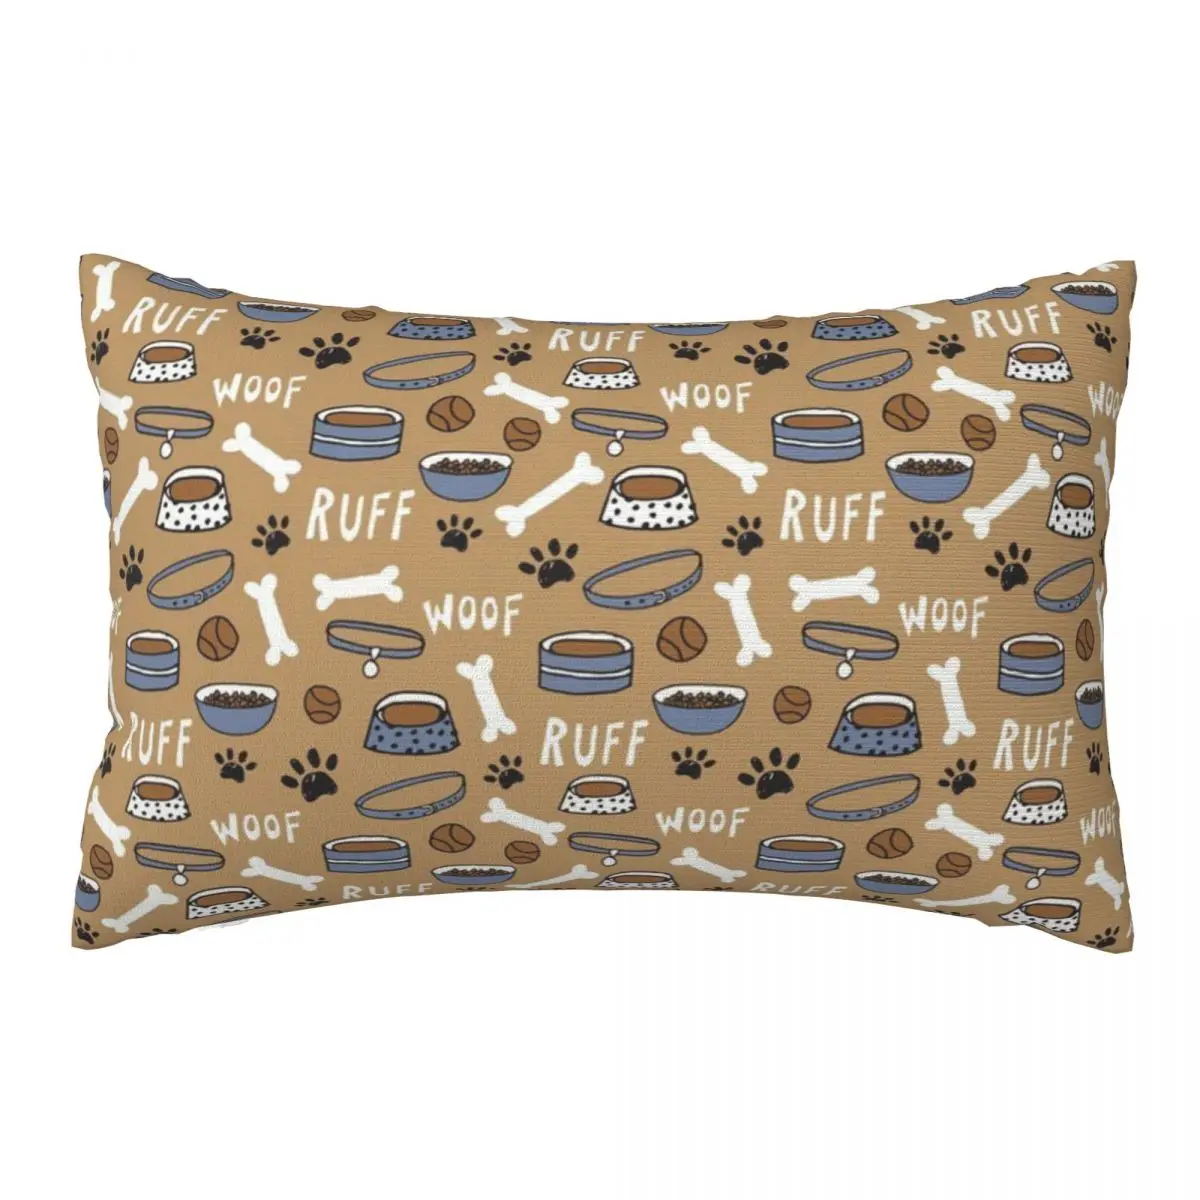 

Dog Paw Ruff Woof Bone Decorative Pillow Covers Throw Pillow Cover Home Pillows Shells Cushion Cover Zippered Pillowcase